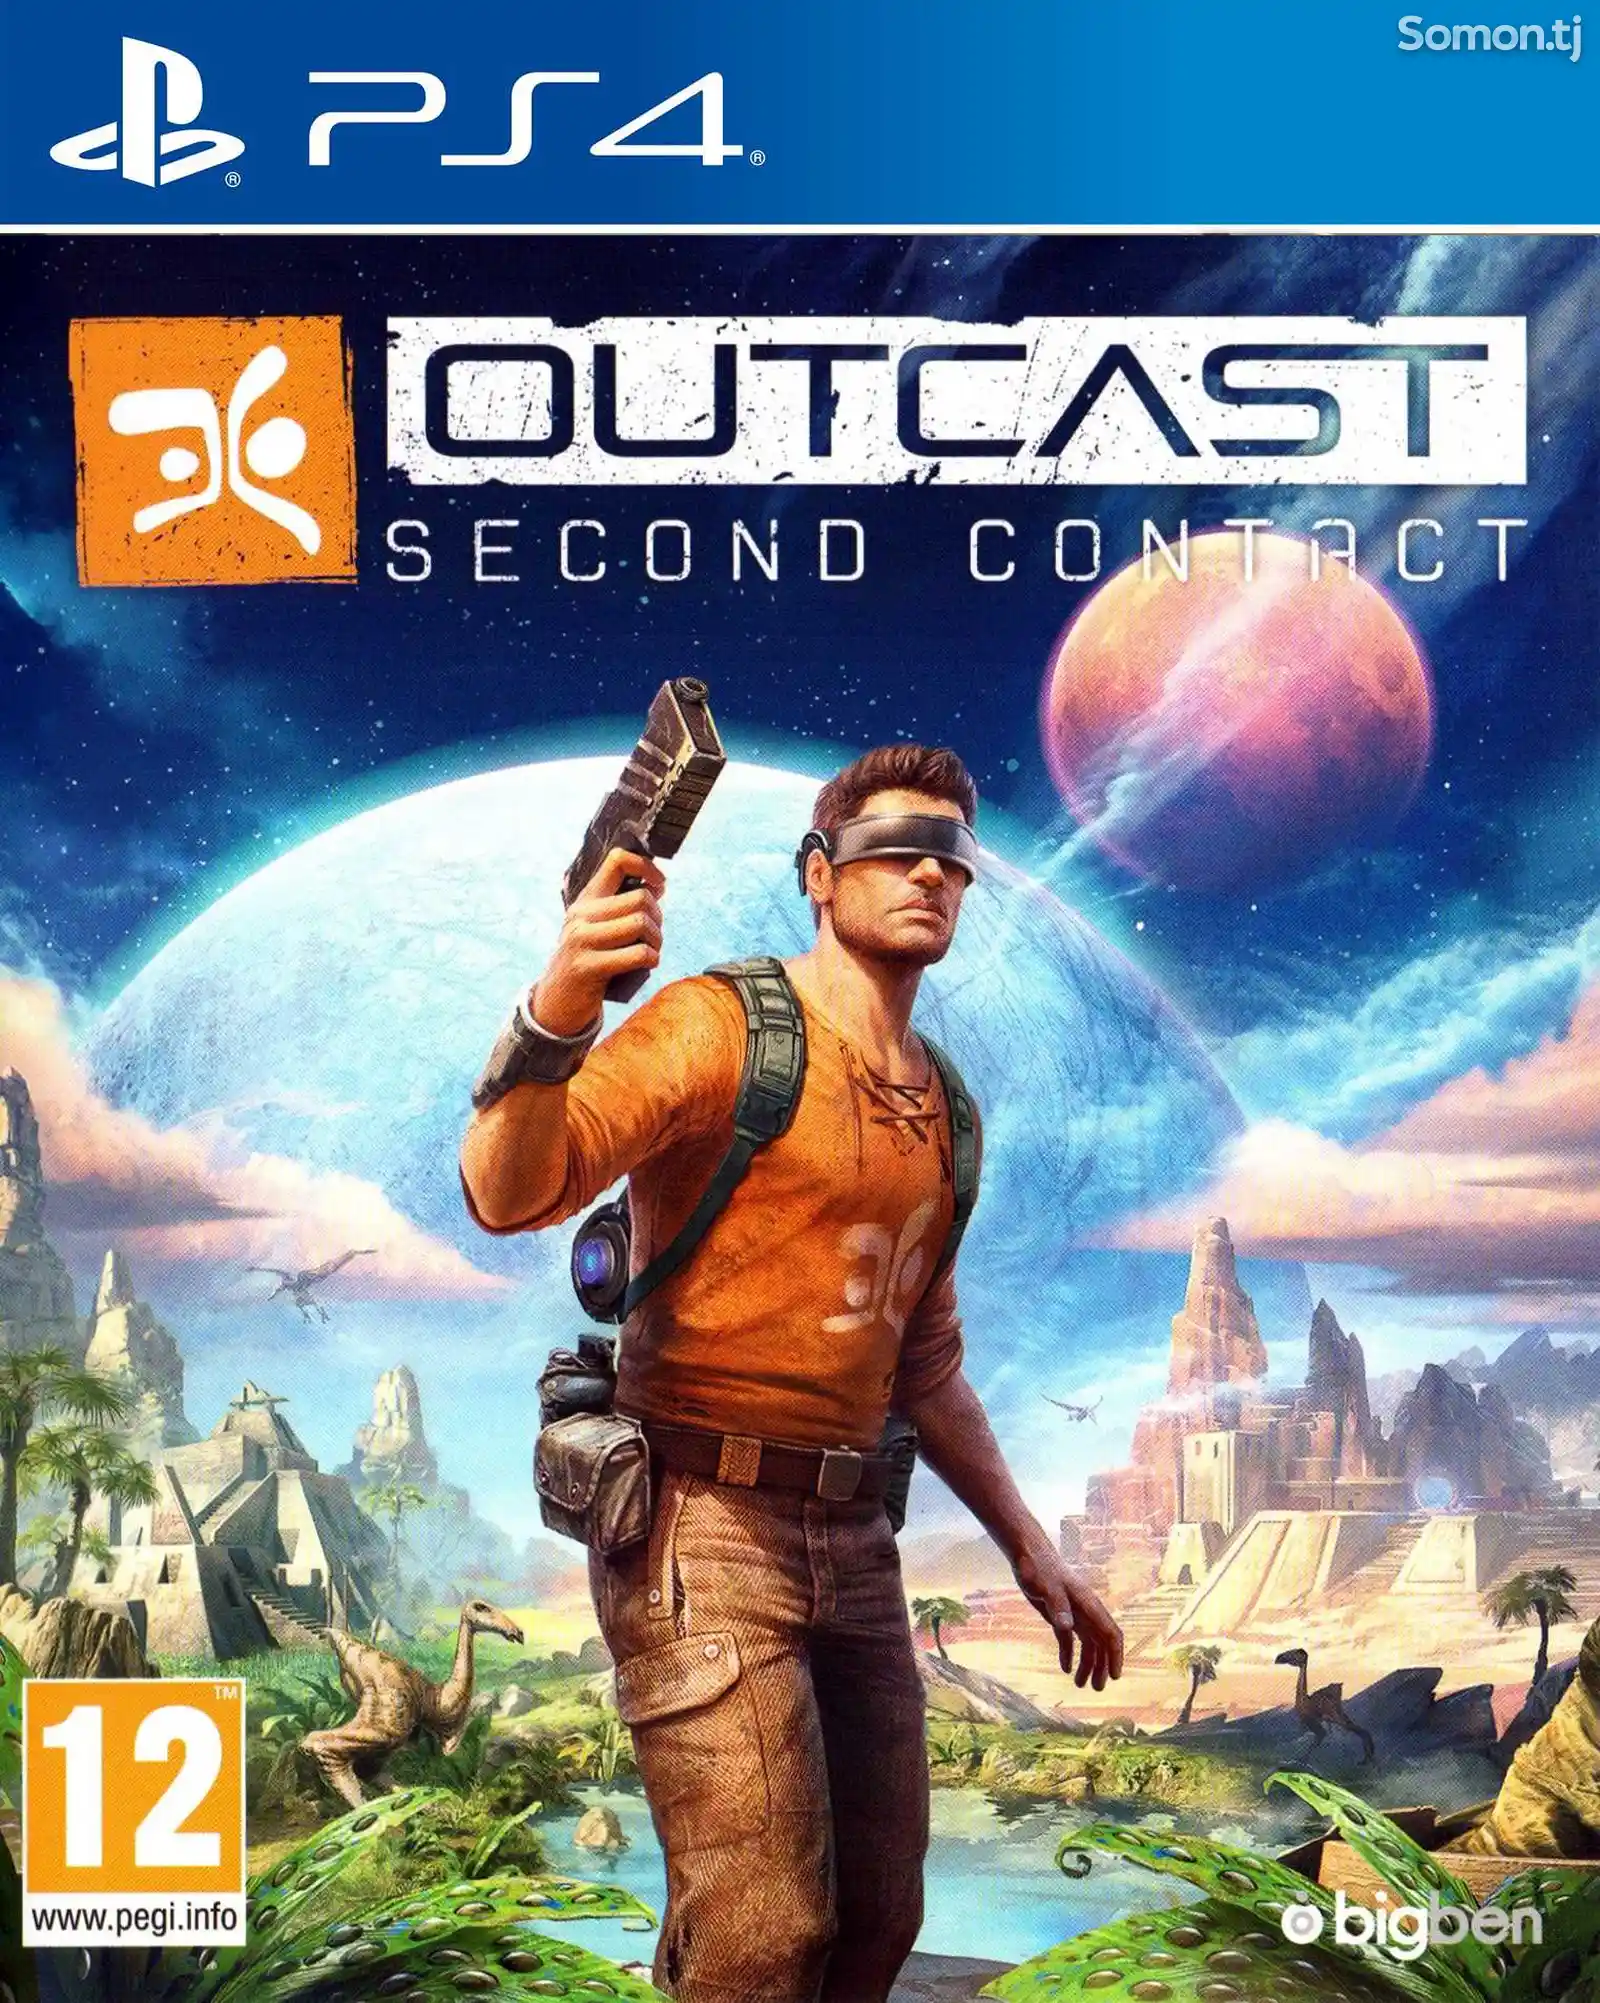 Игра Outcast second contact для PS-4 / 5.05 / 6.72 / 7.02 / 7.55 / 9.00 /-1